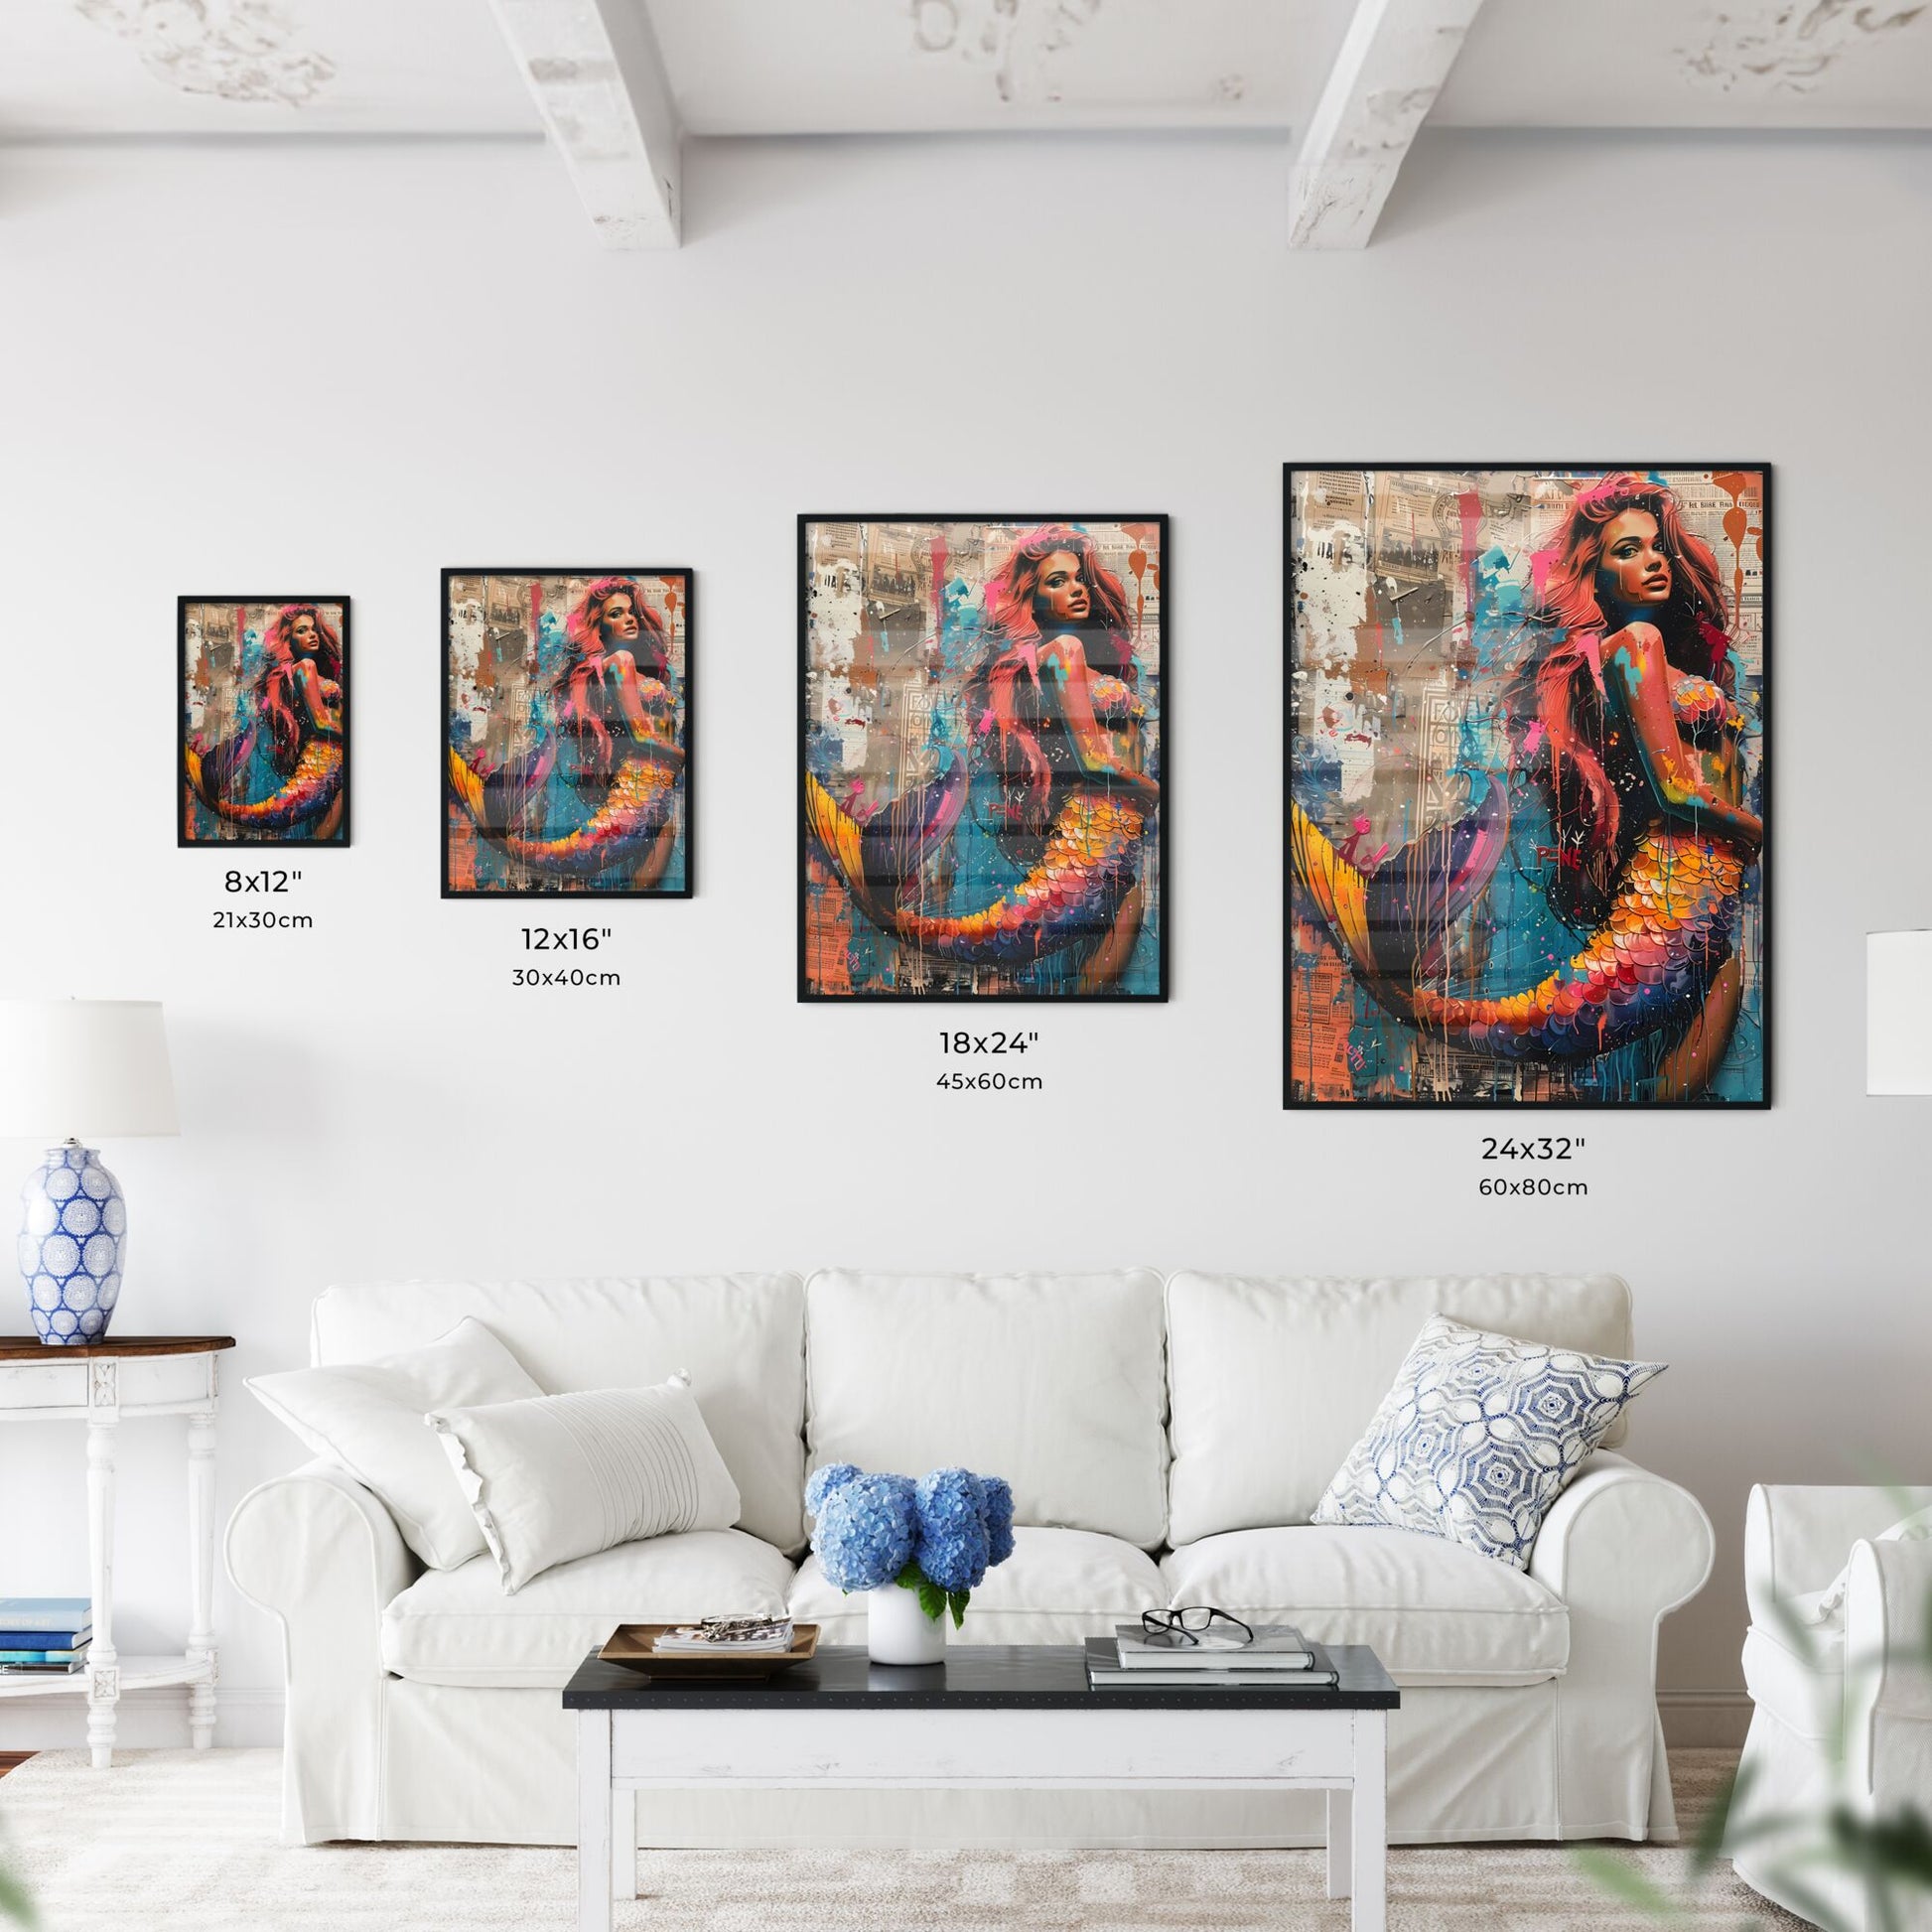 Vibrant Birth of a Mermaid: Pop Art Screen Print Trash Poster Painting Spray Paint Default Title